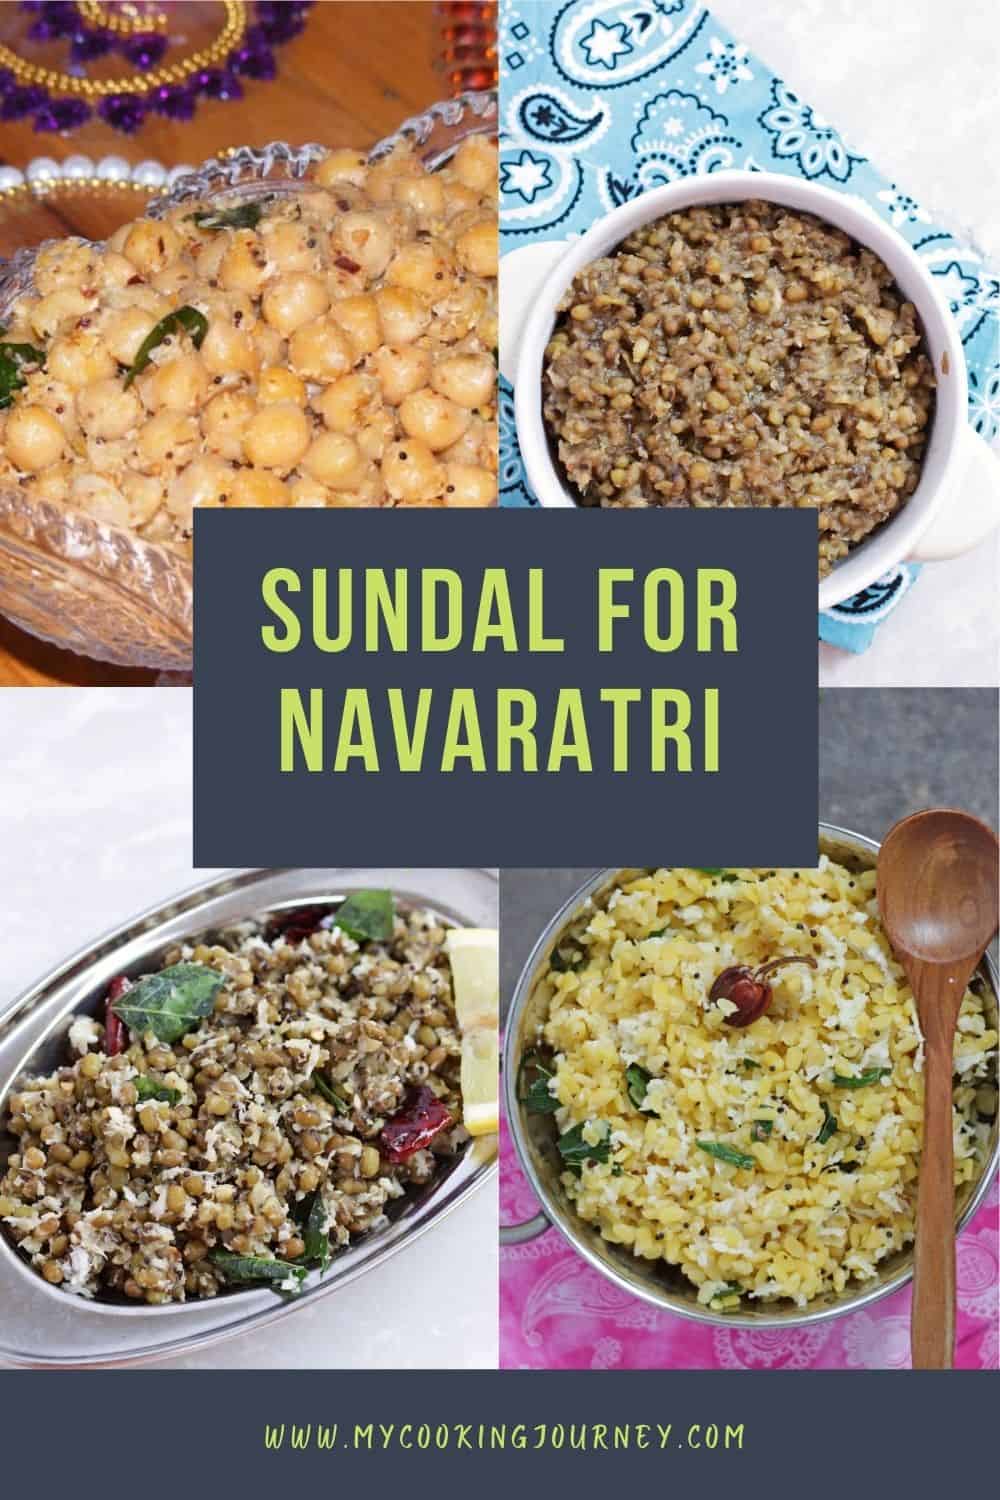 Sundal recipes for Navarathri